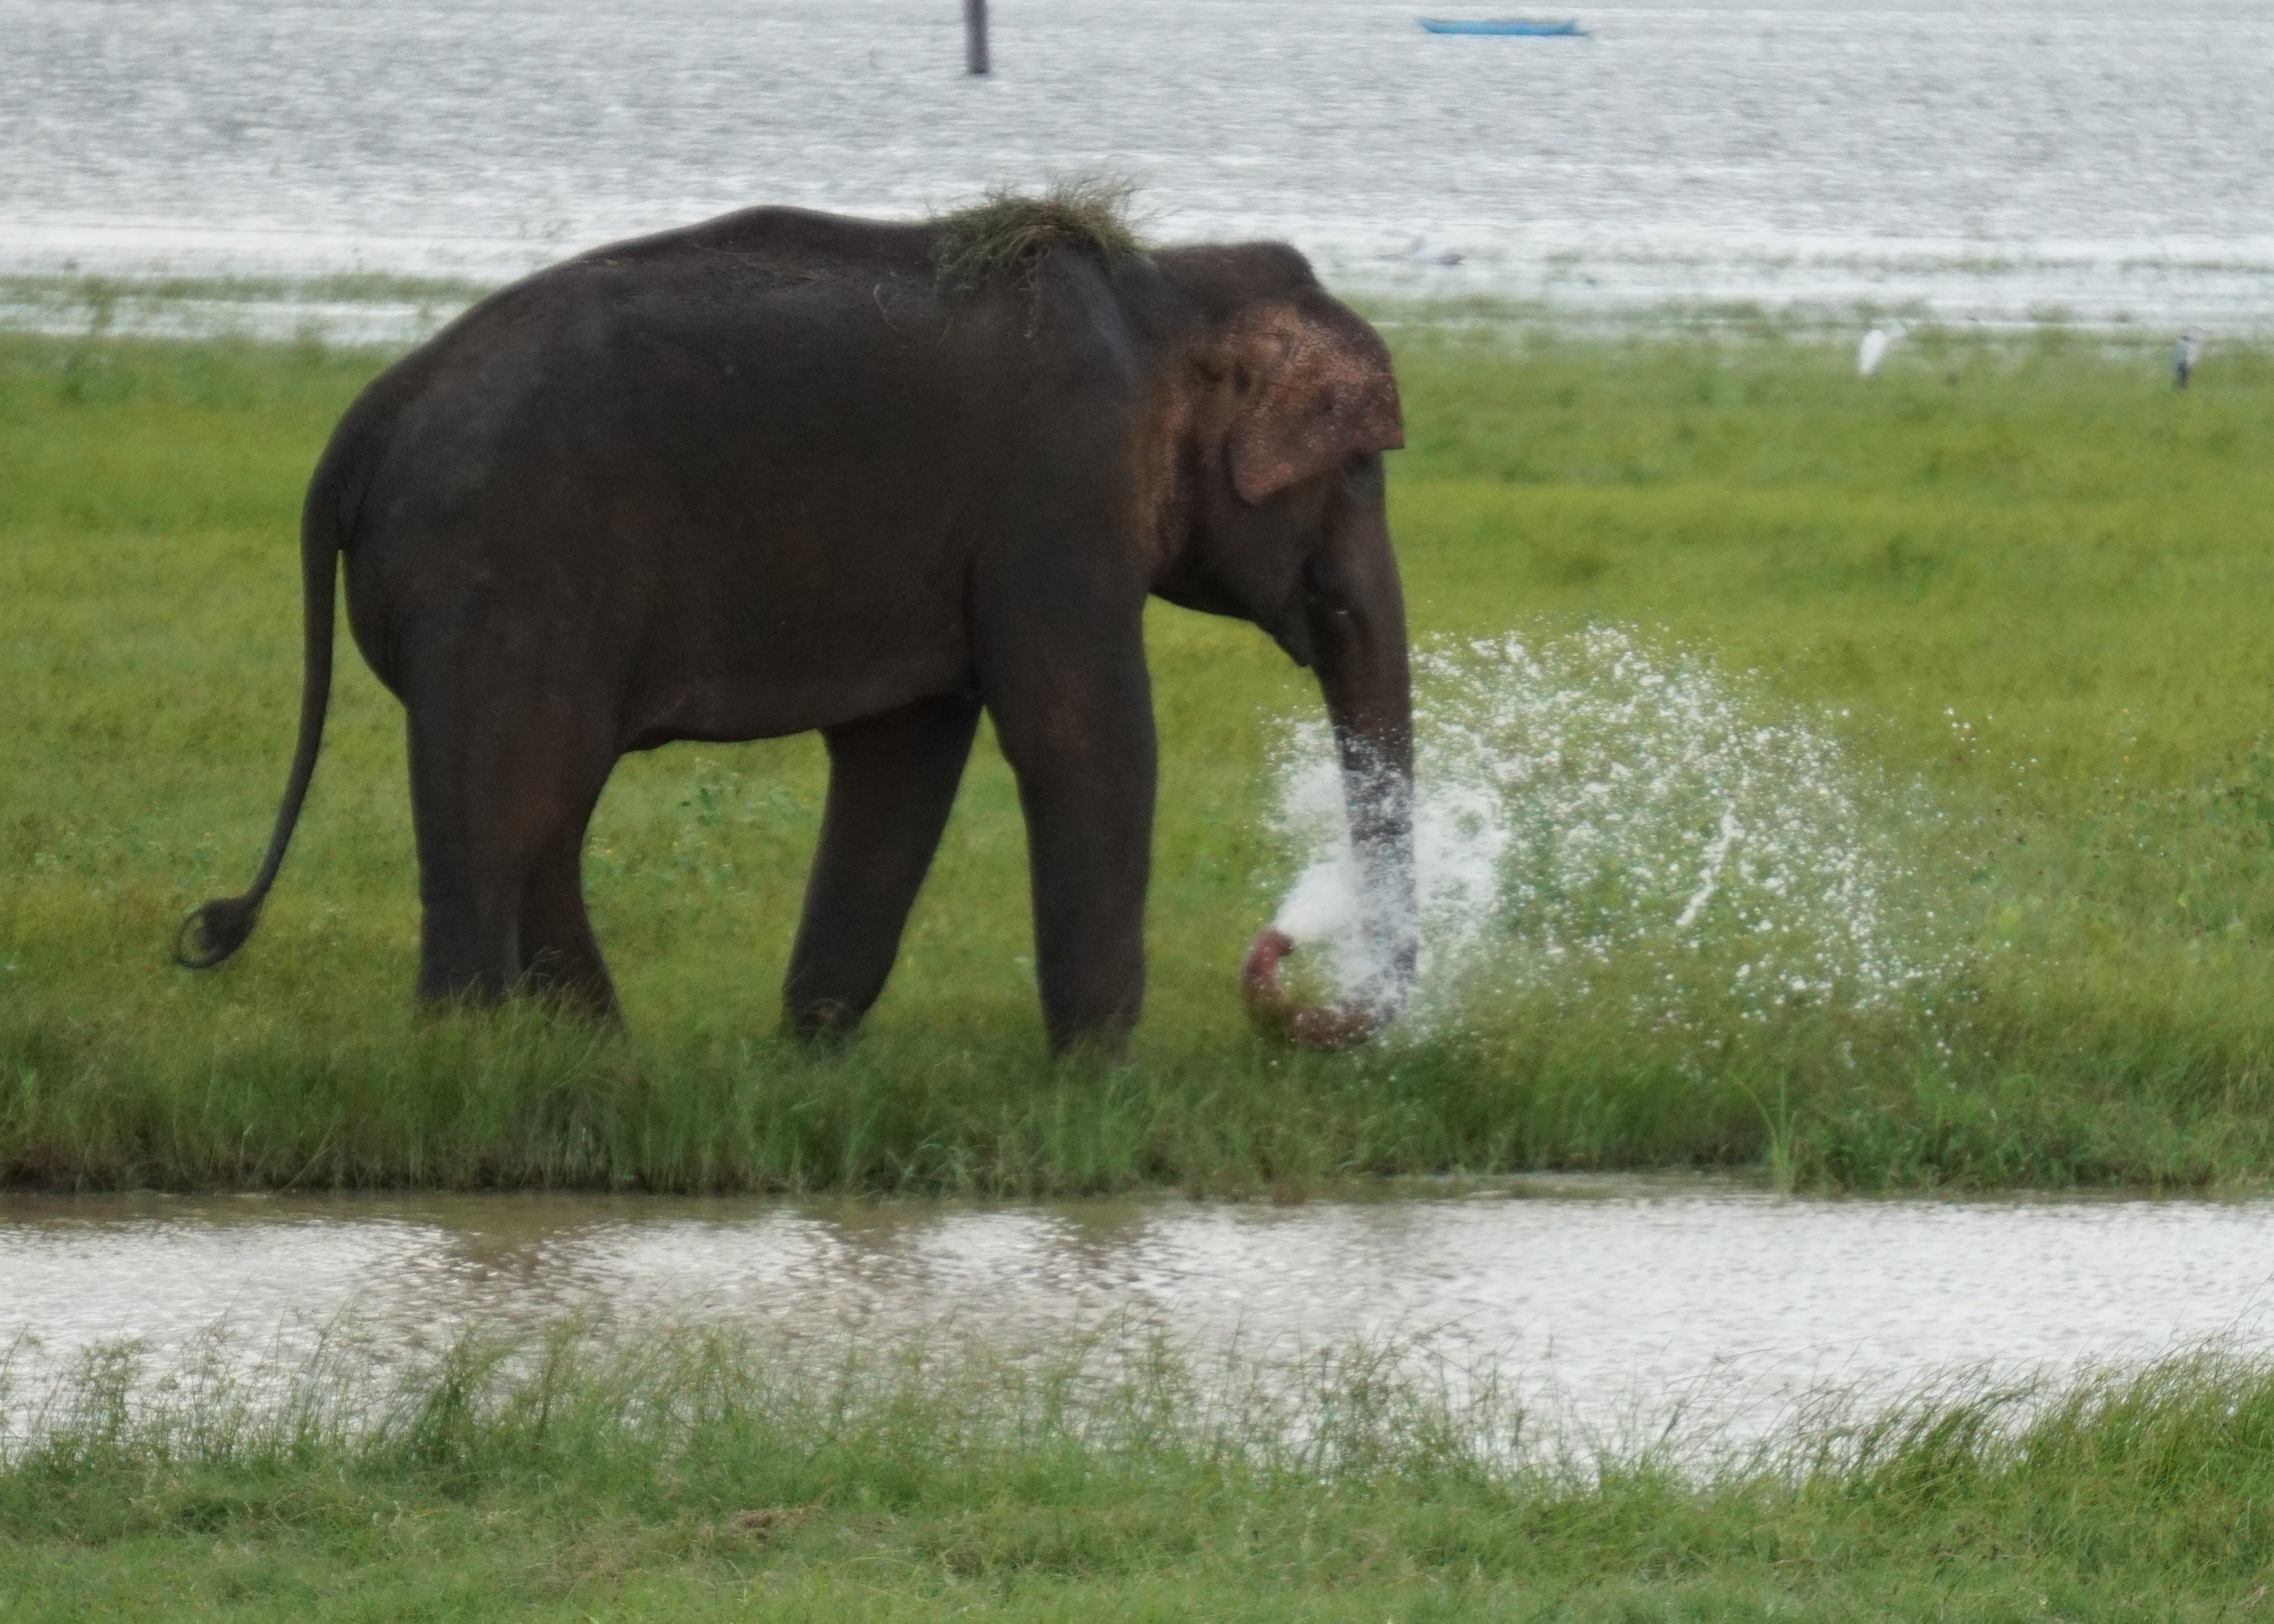 Elephant spraying water